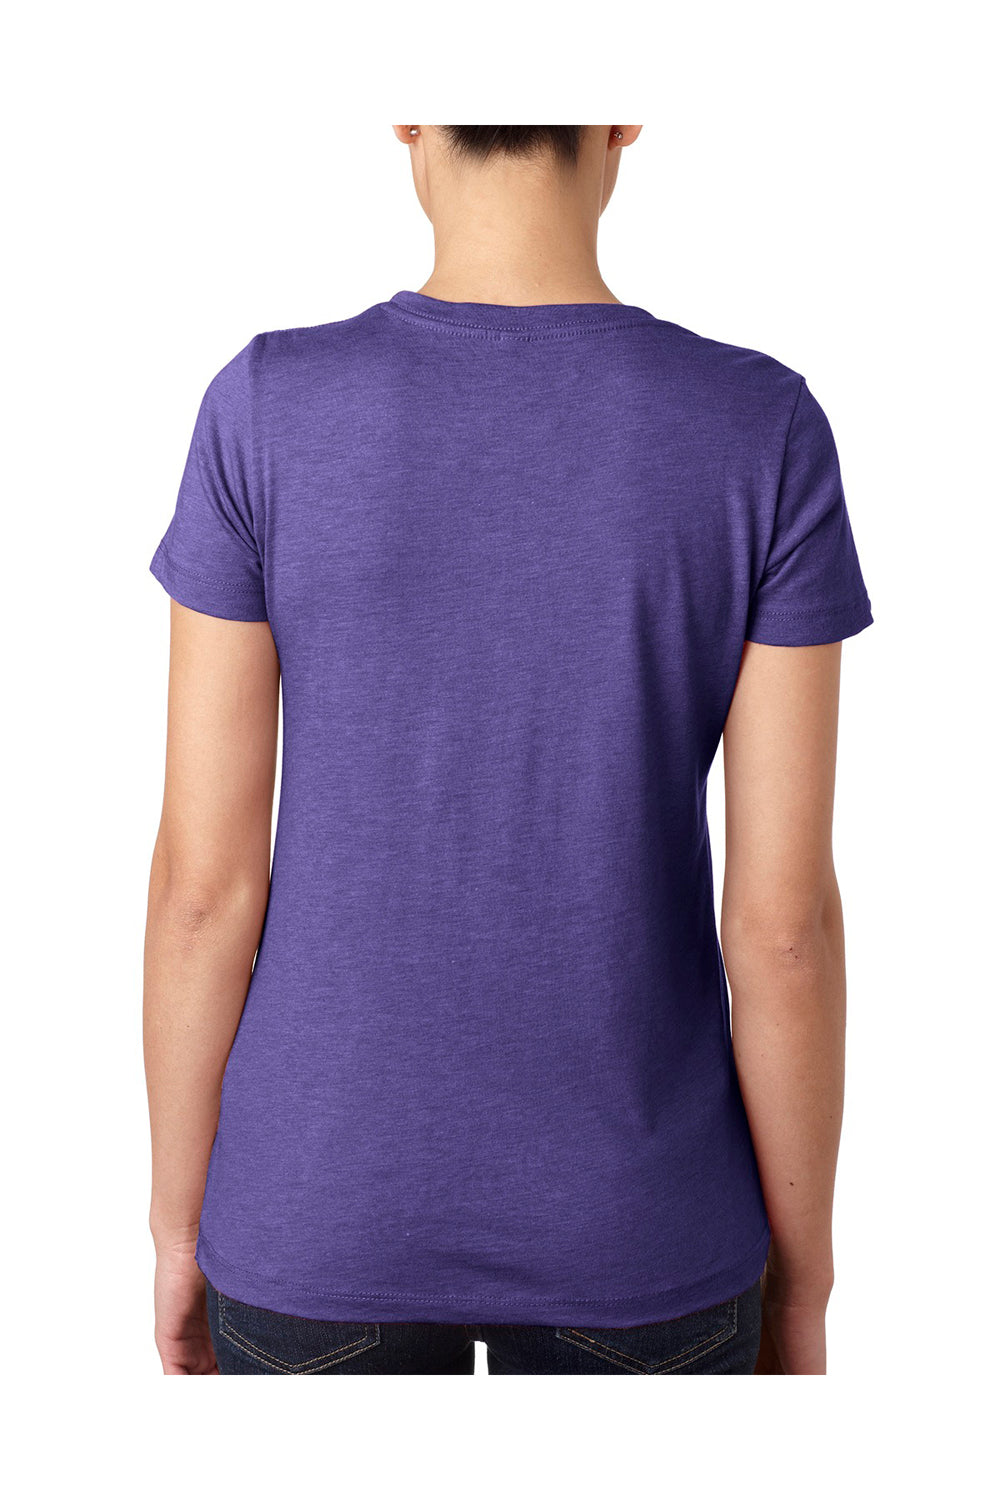 Next Level 6710 Womens Jersey Short Sleeve Crewneck T-Shirt Purple Rush Back